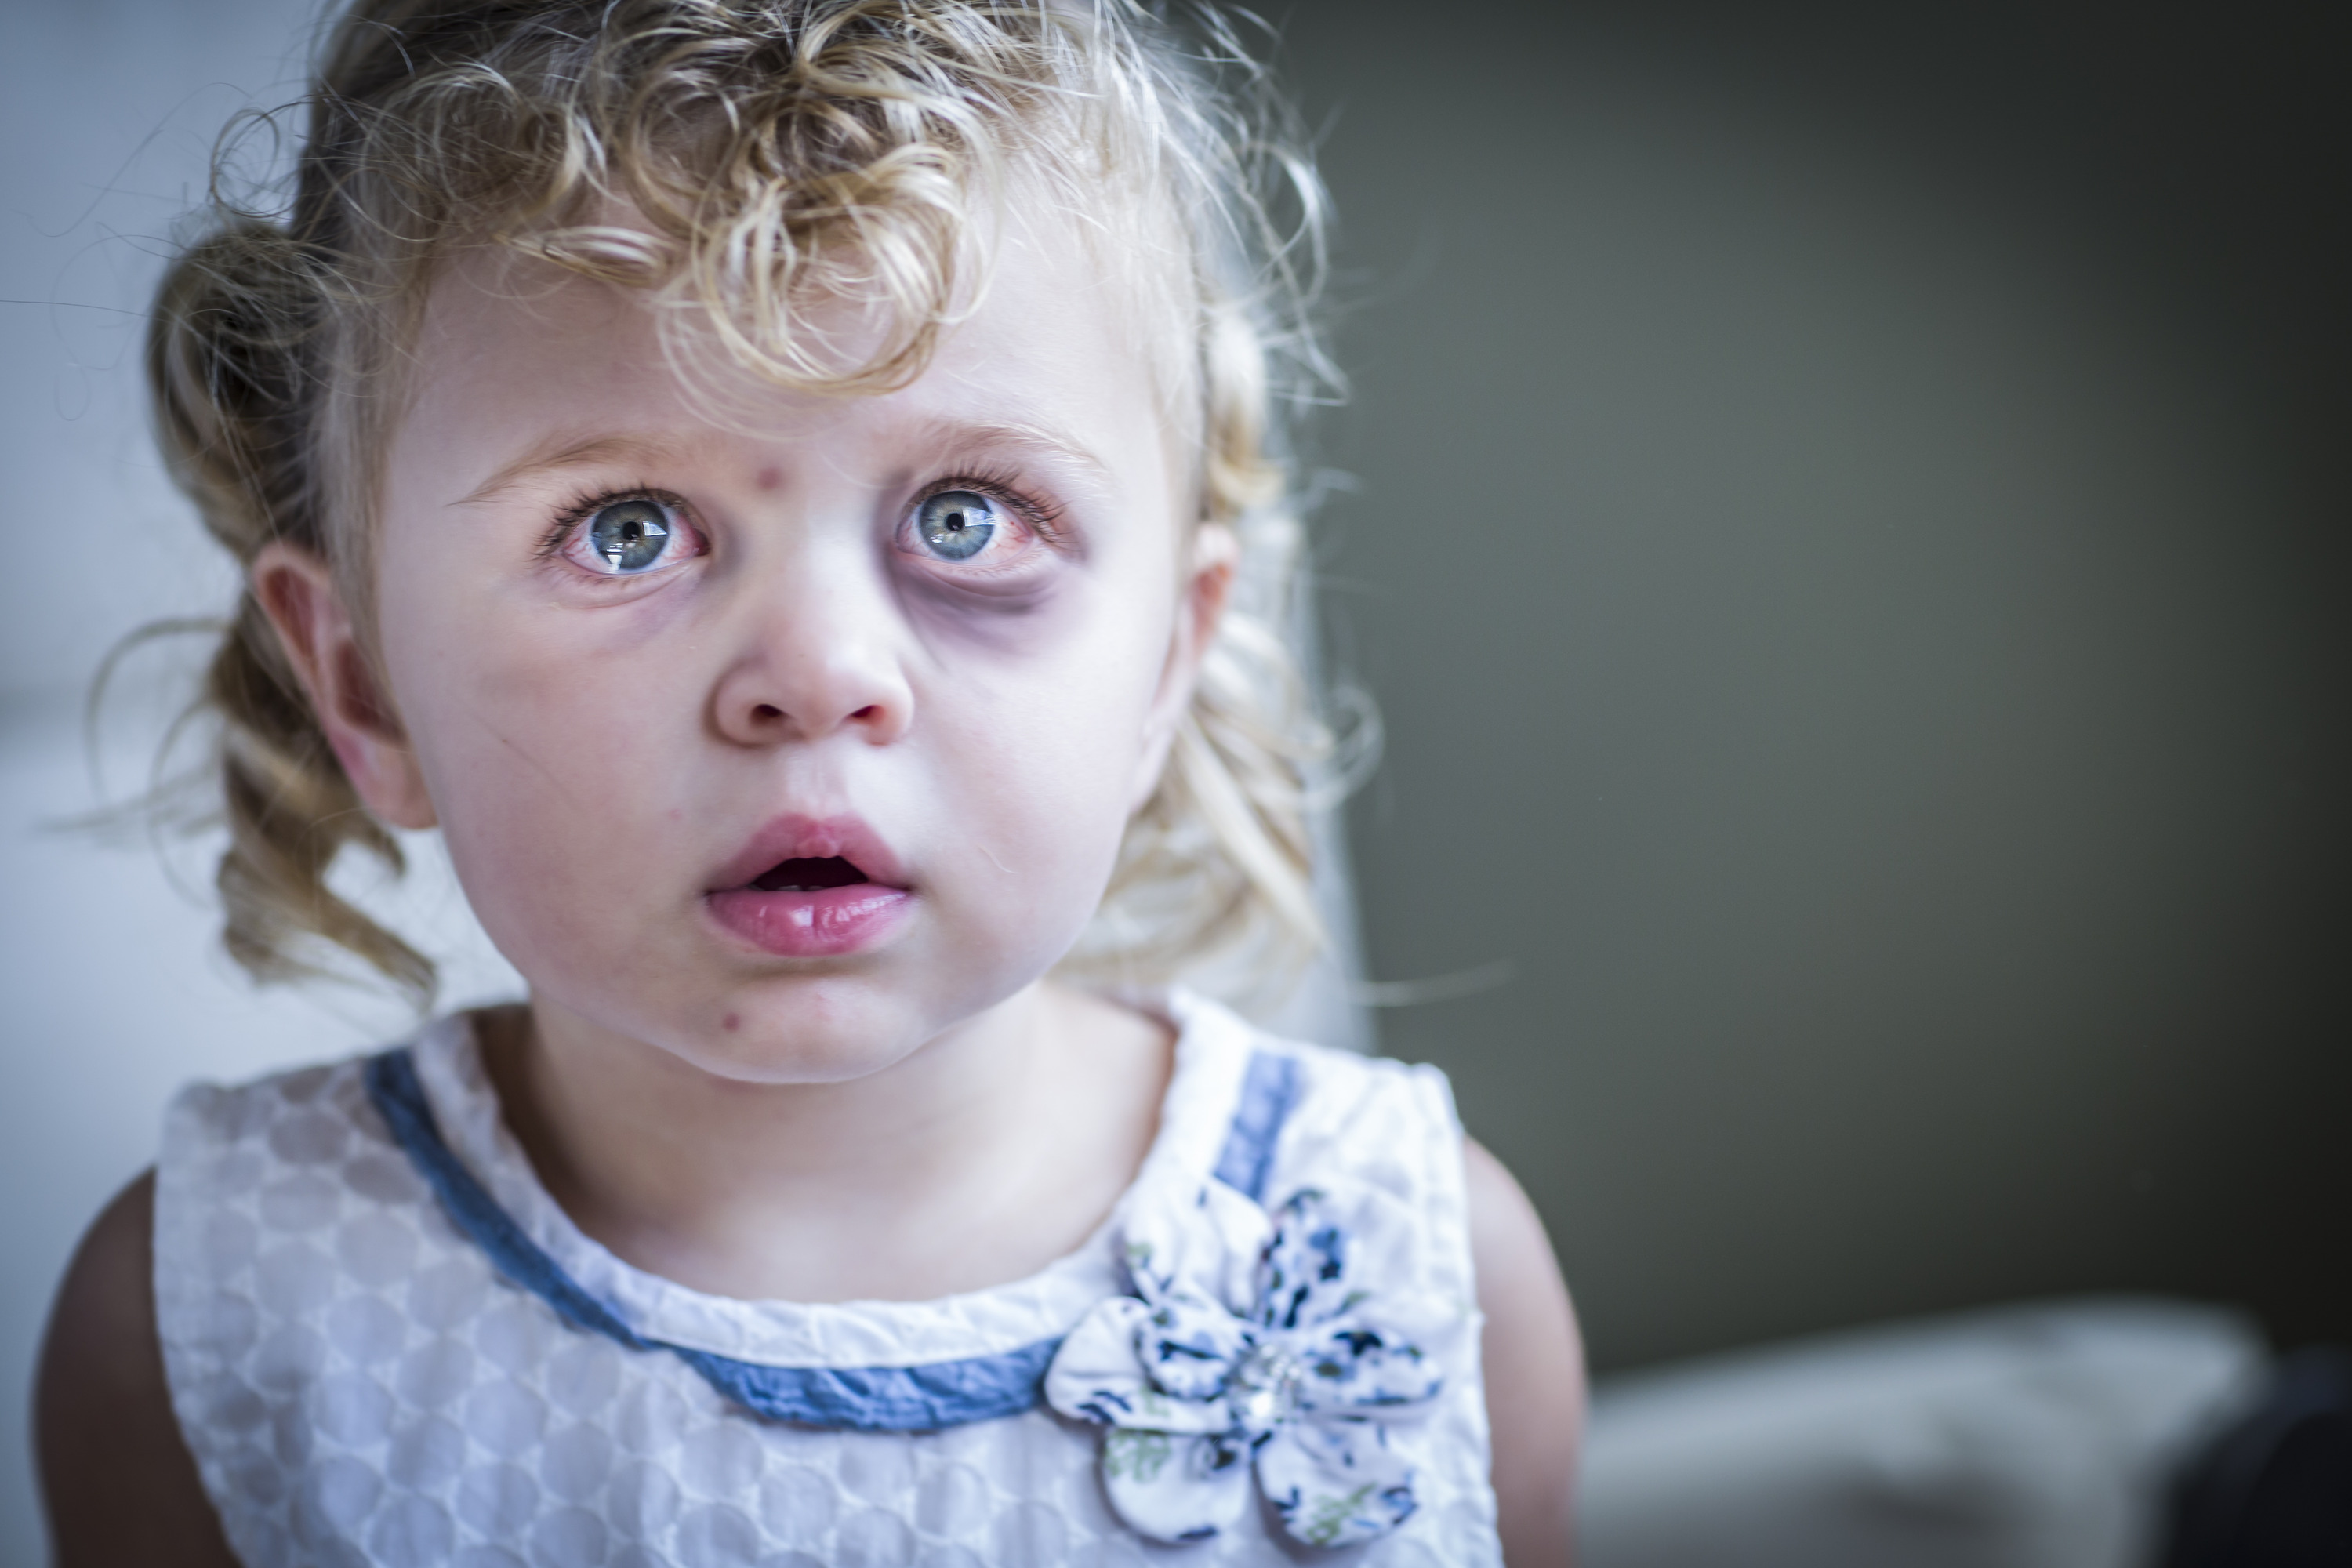 Sad and Frightened Little Girl with Bloodshot and Bruised Eyes.